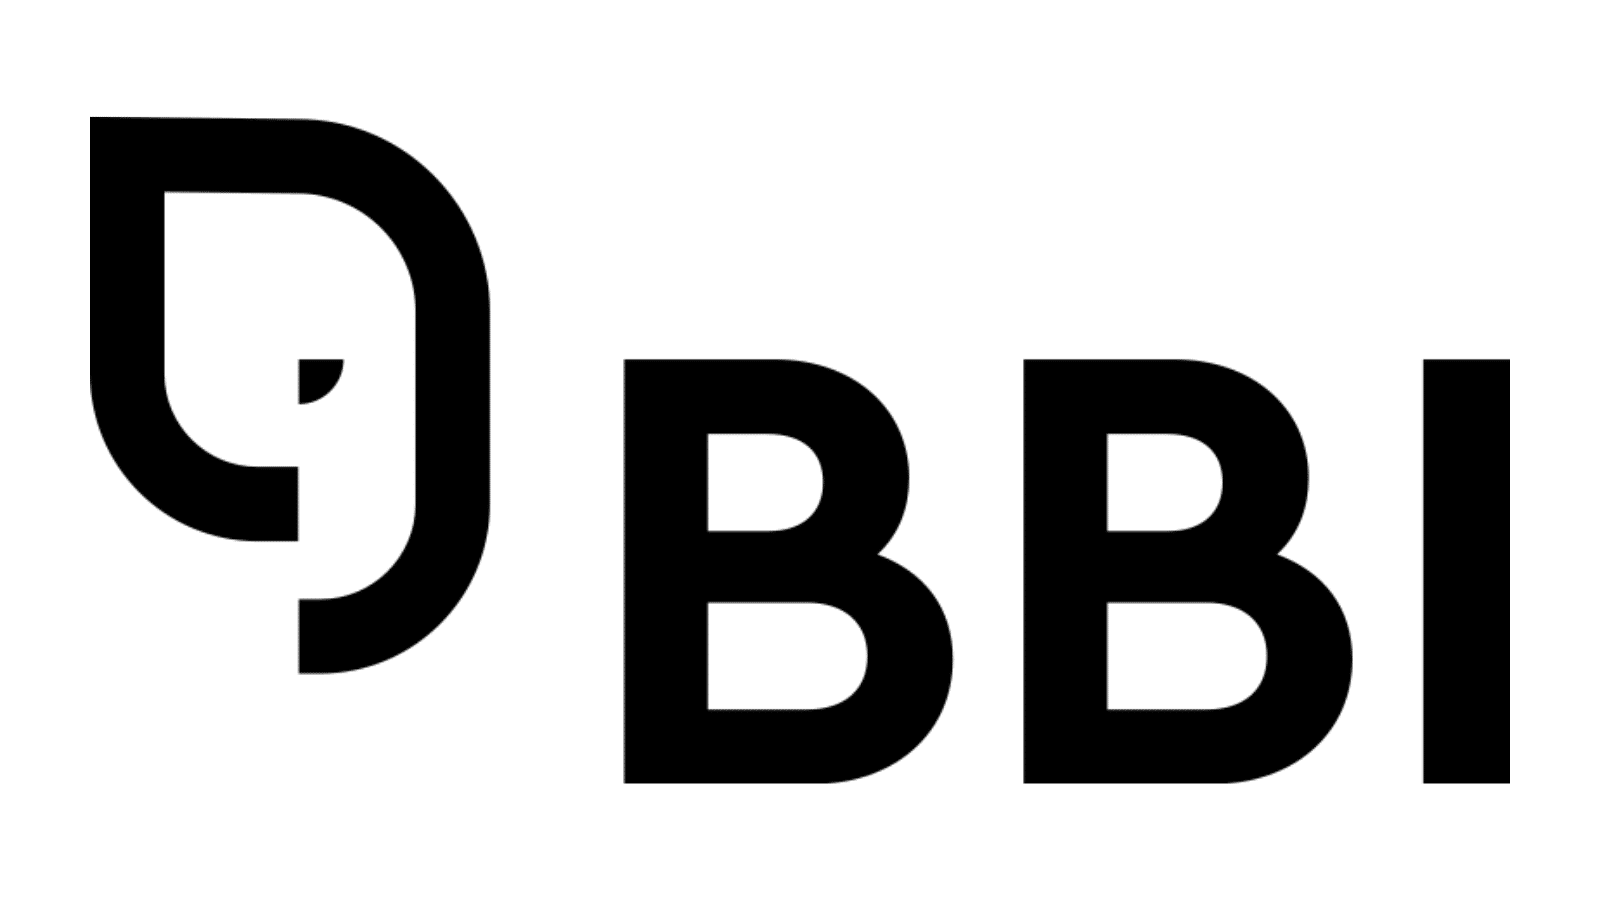 bbi